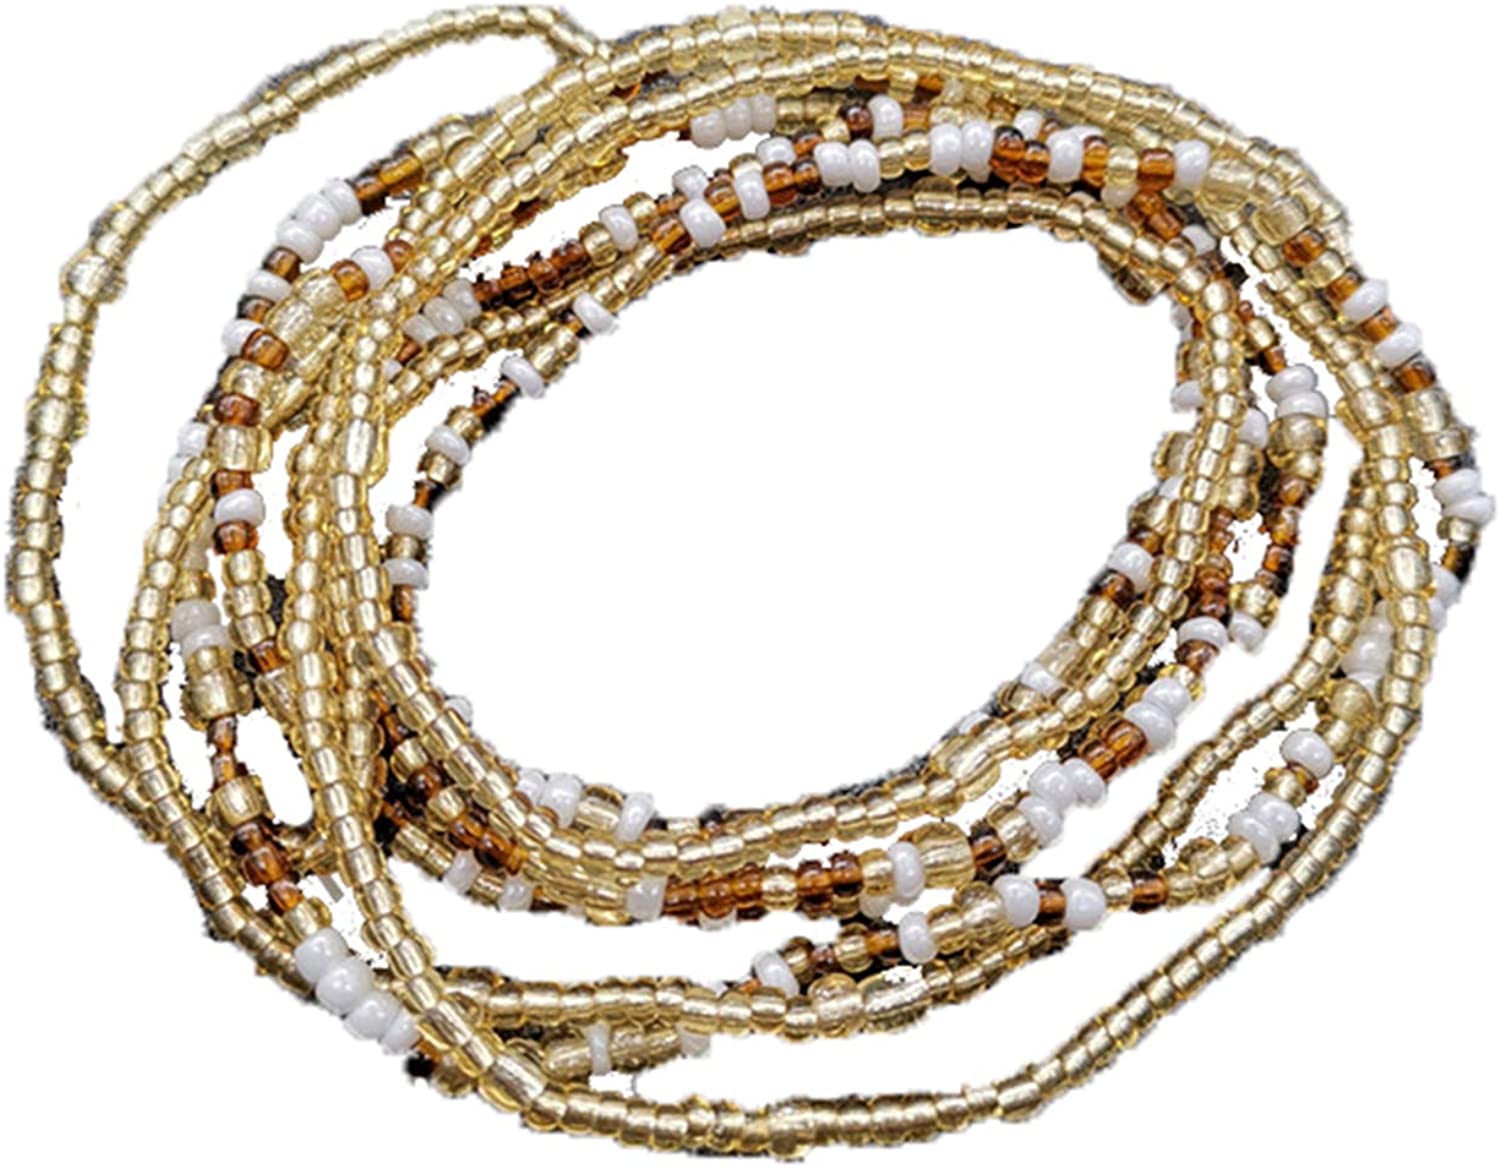 Althrorry Waist Beads Body Jewelry, Colorful Belly Beads, Bead Jewelry, Belly Chains, Waist Chain (2 Piece)